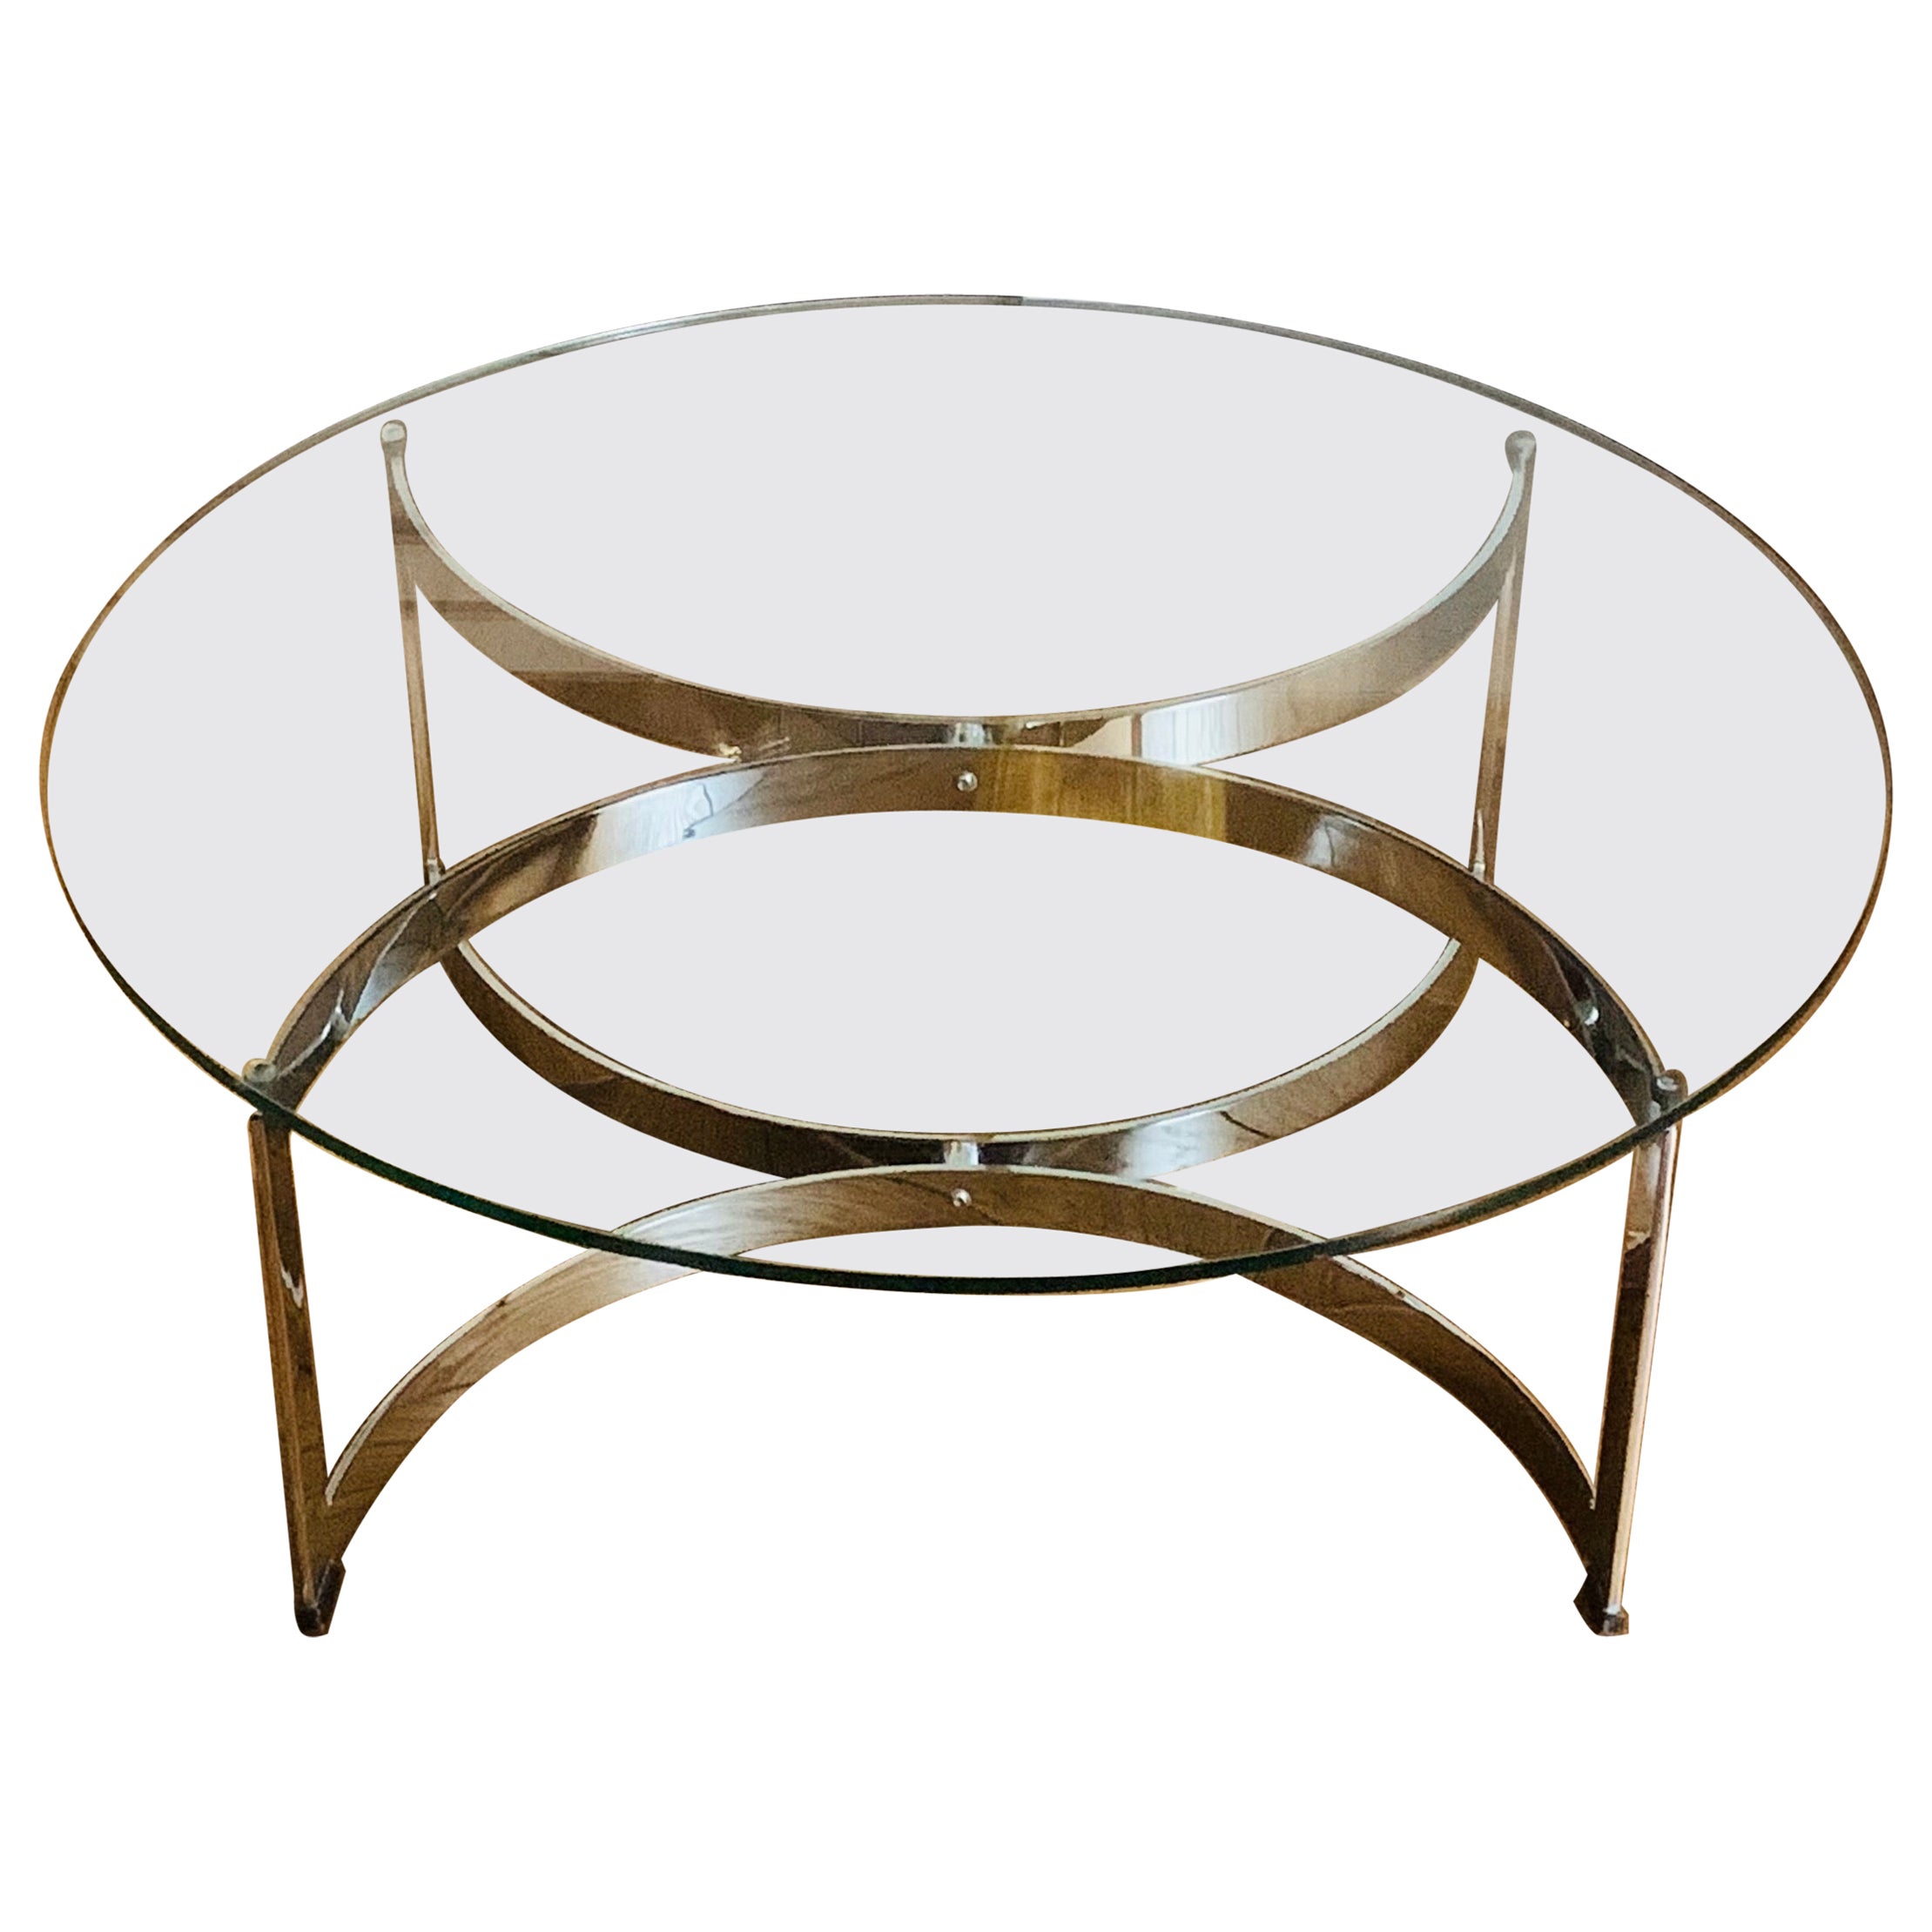 1970s British Made Merrow Associates Round Glass & Chromed Metal Coffee Table